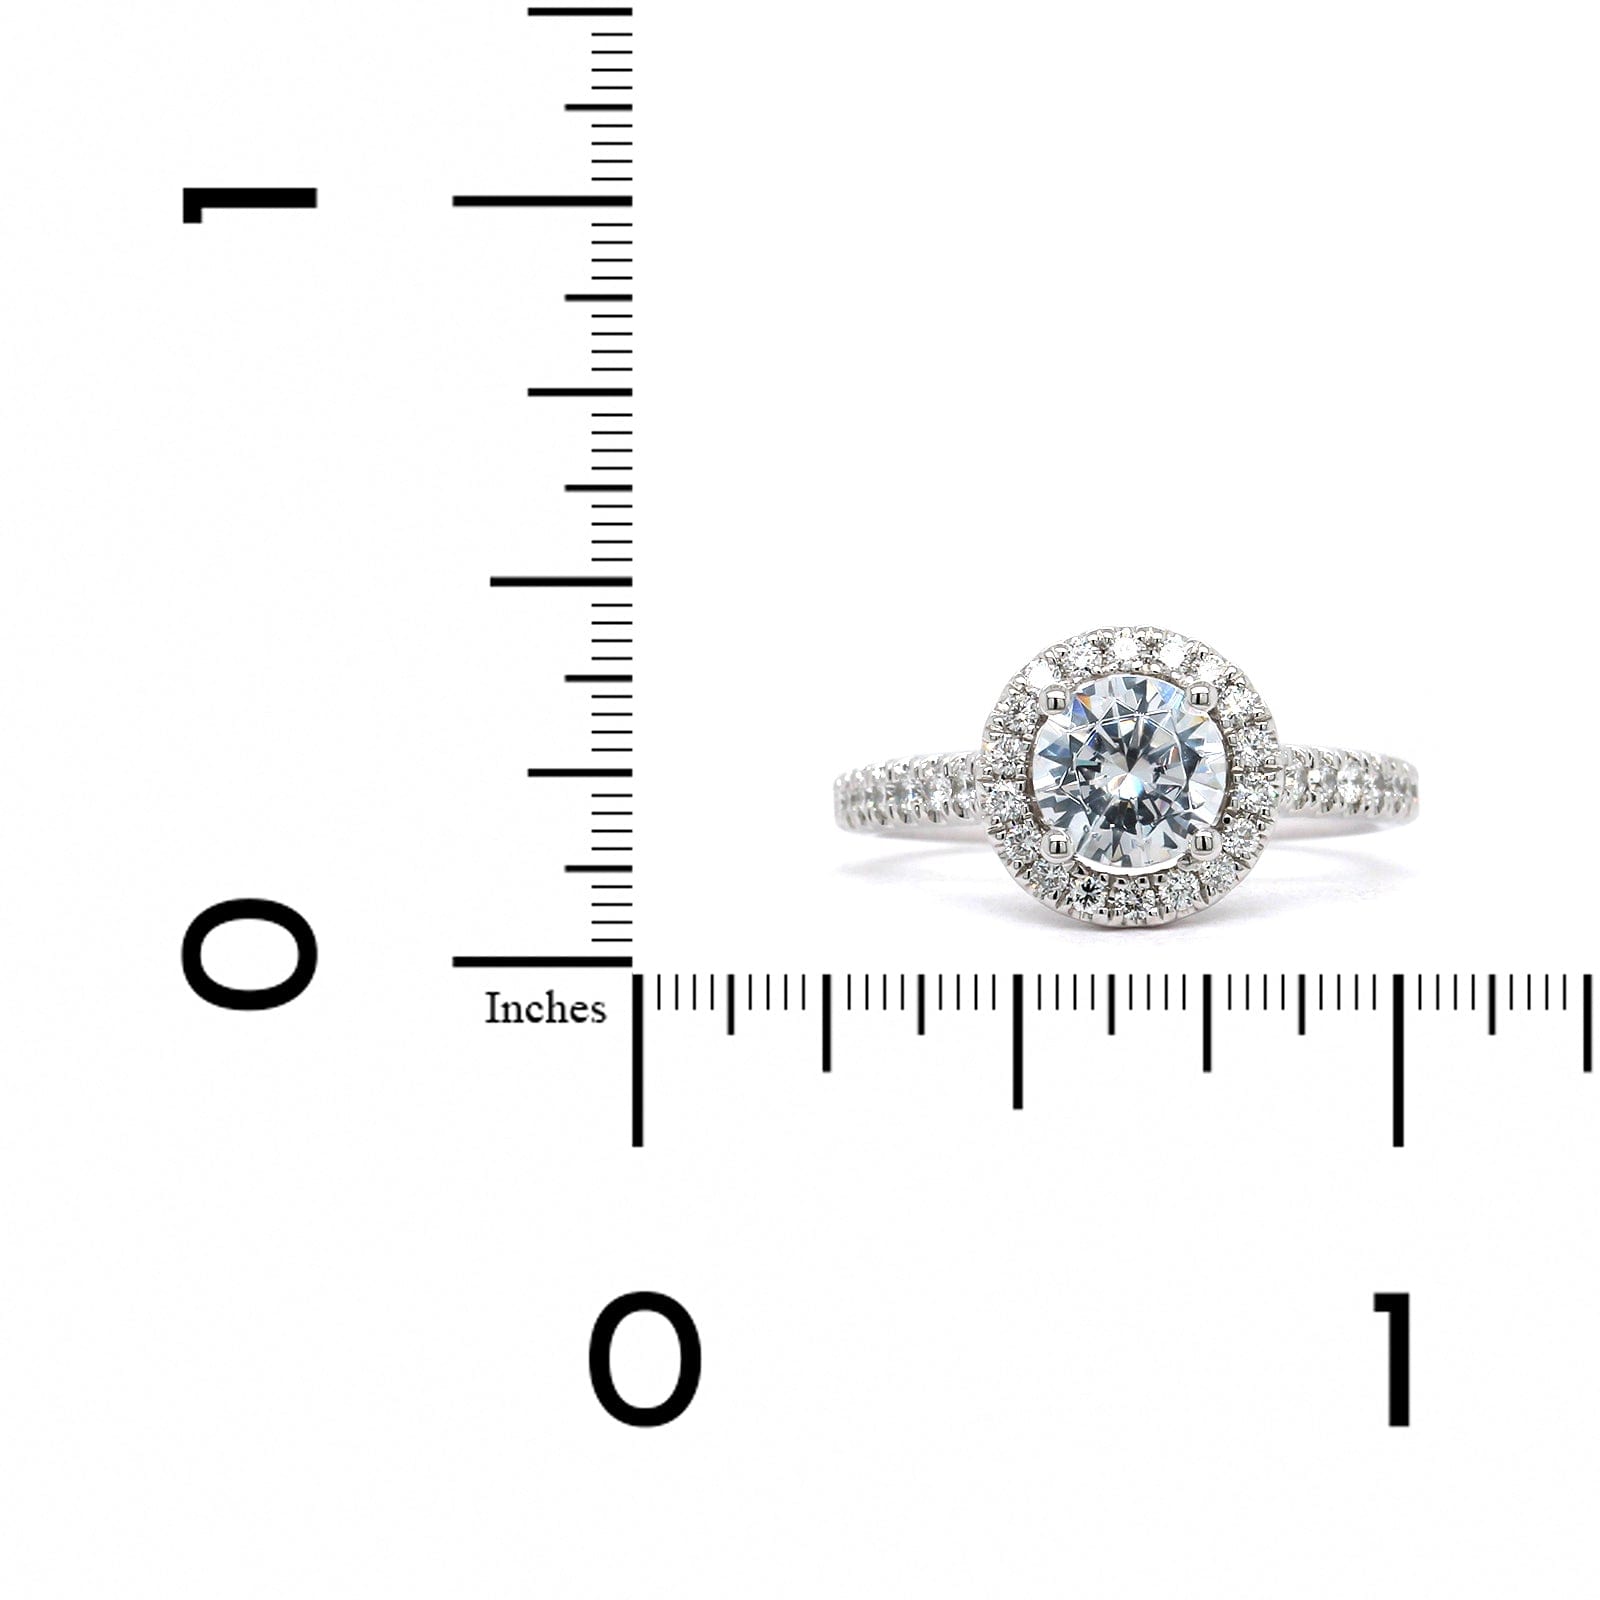 Platinum Diamond Halo Engagement Ring Setting